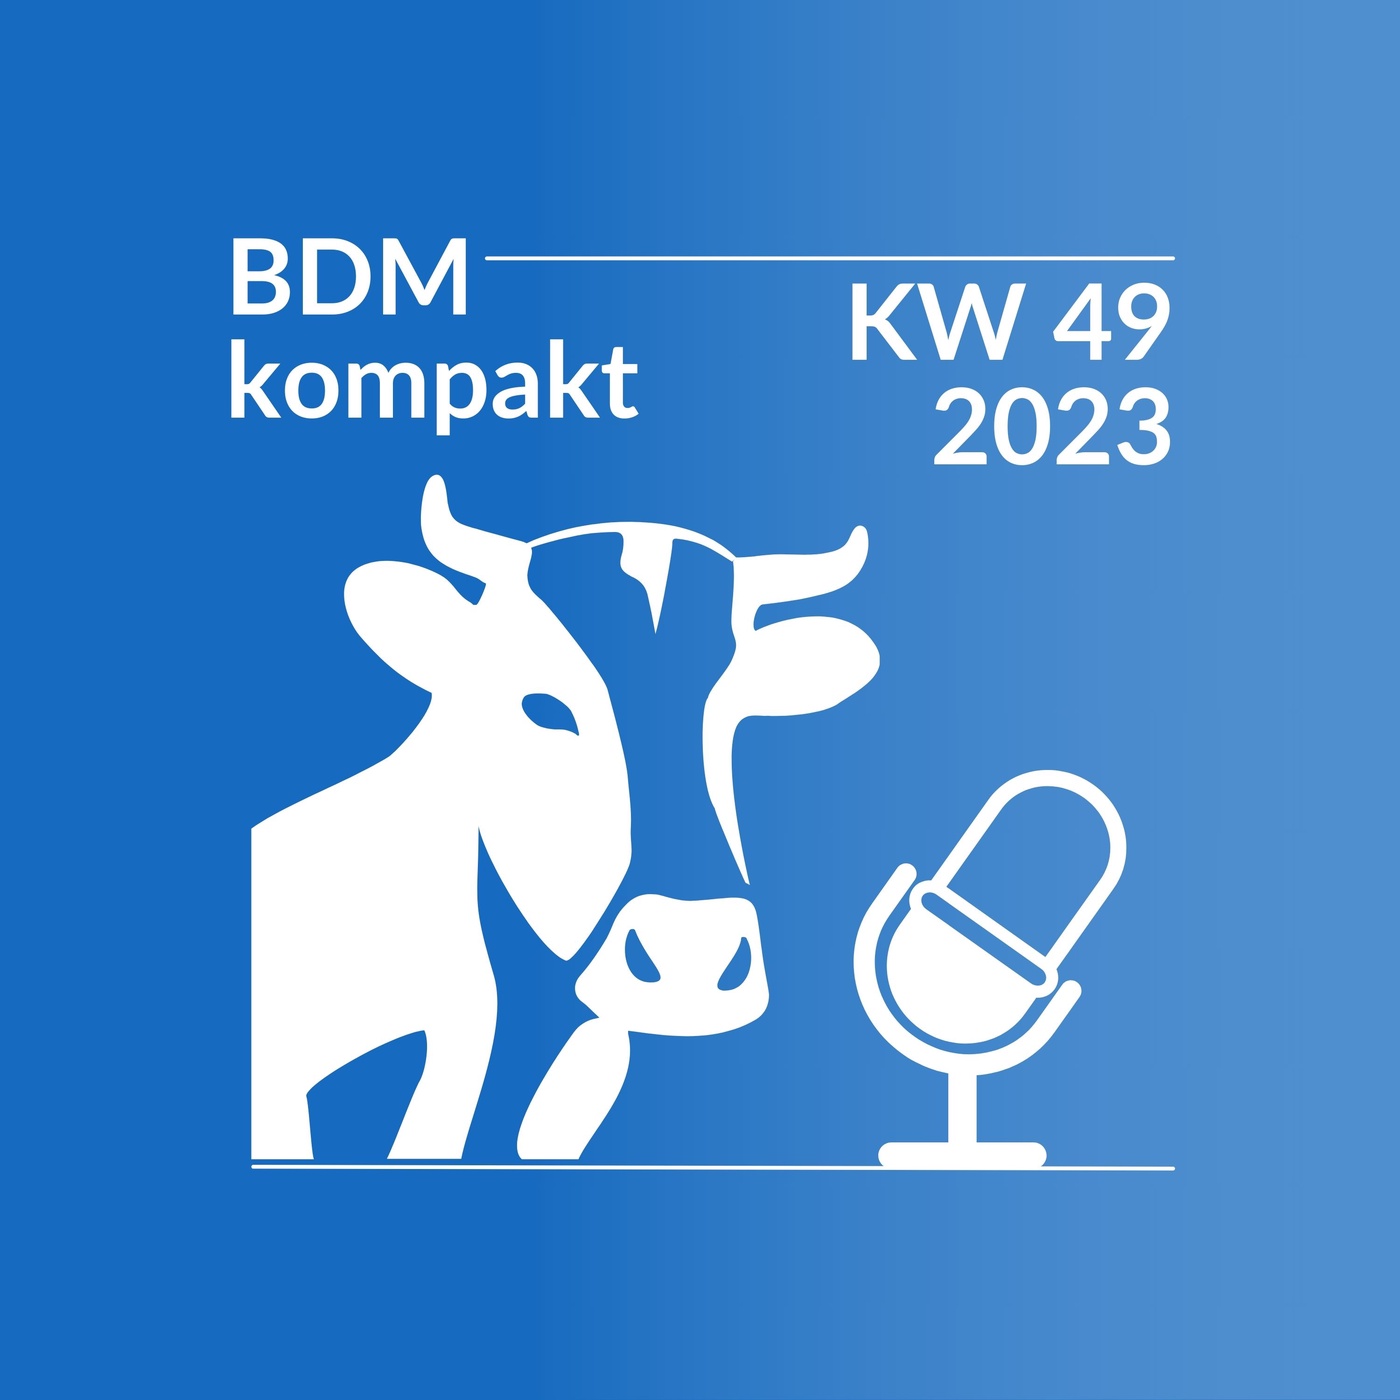 BDM kompakt KW 49/2023